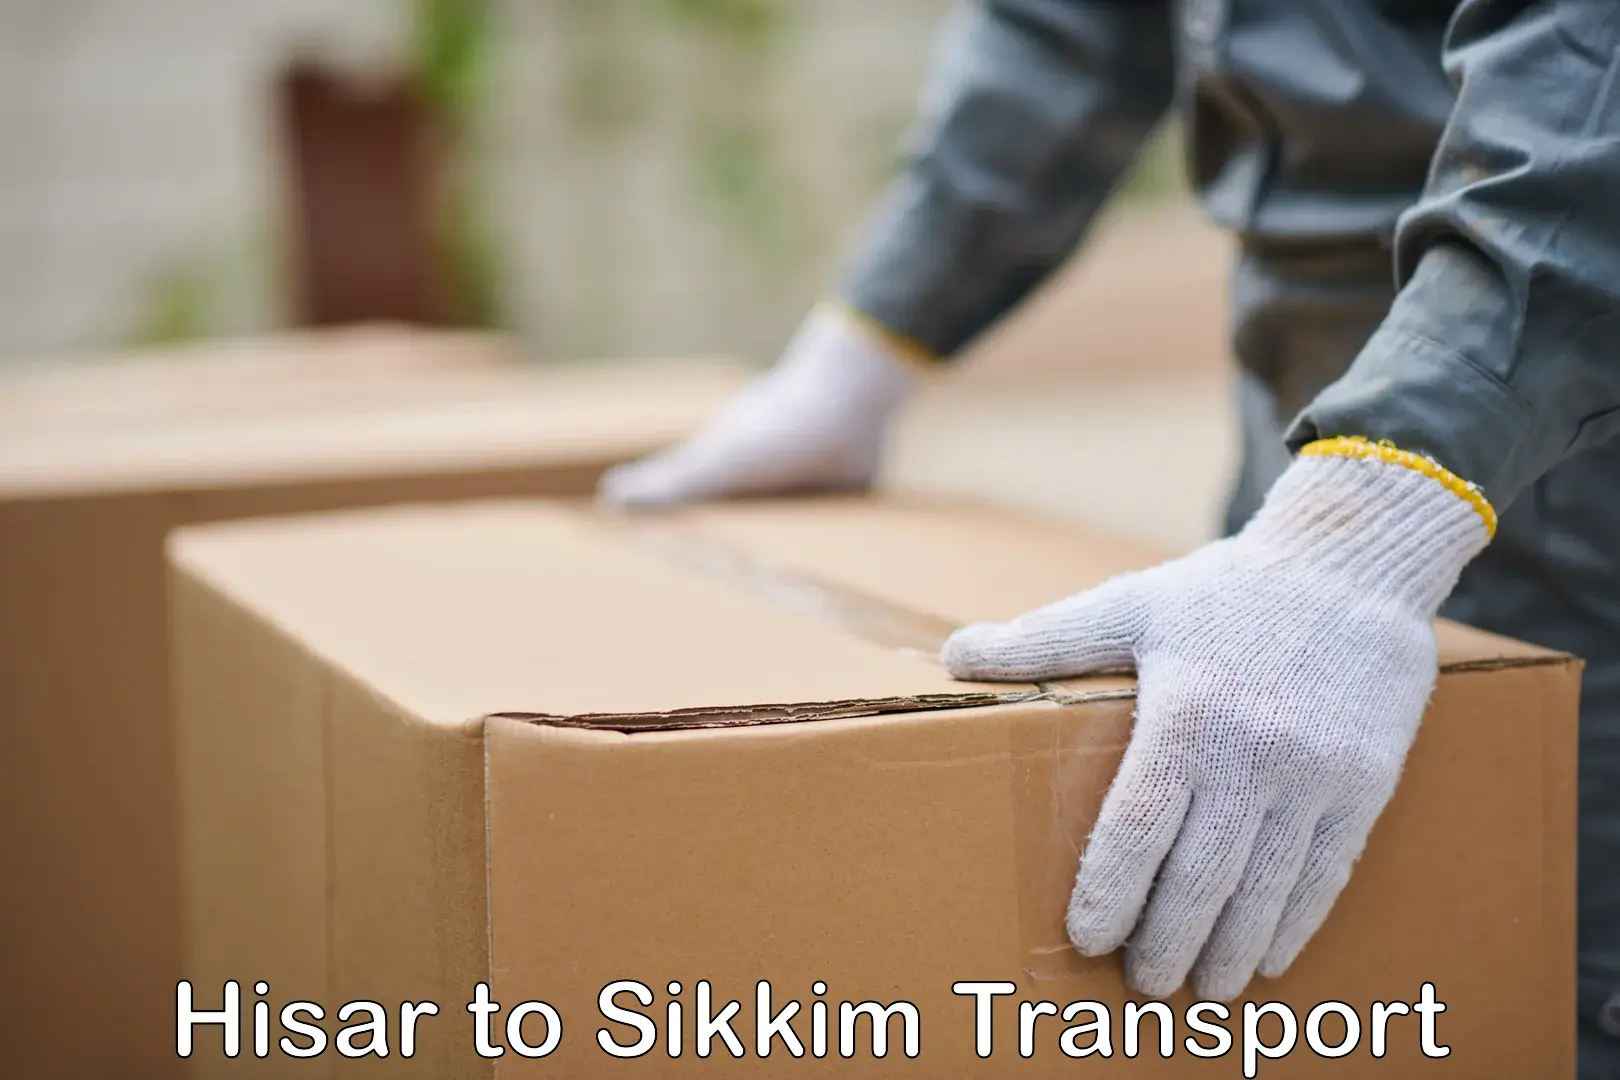 Online transport service Hisar to Sikkim